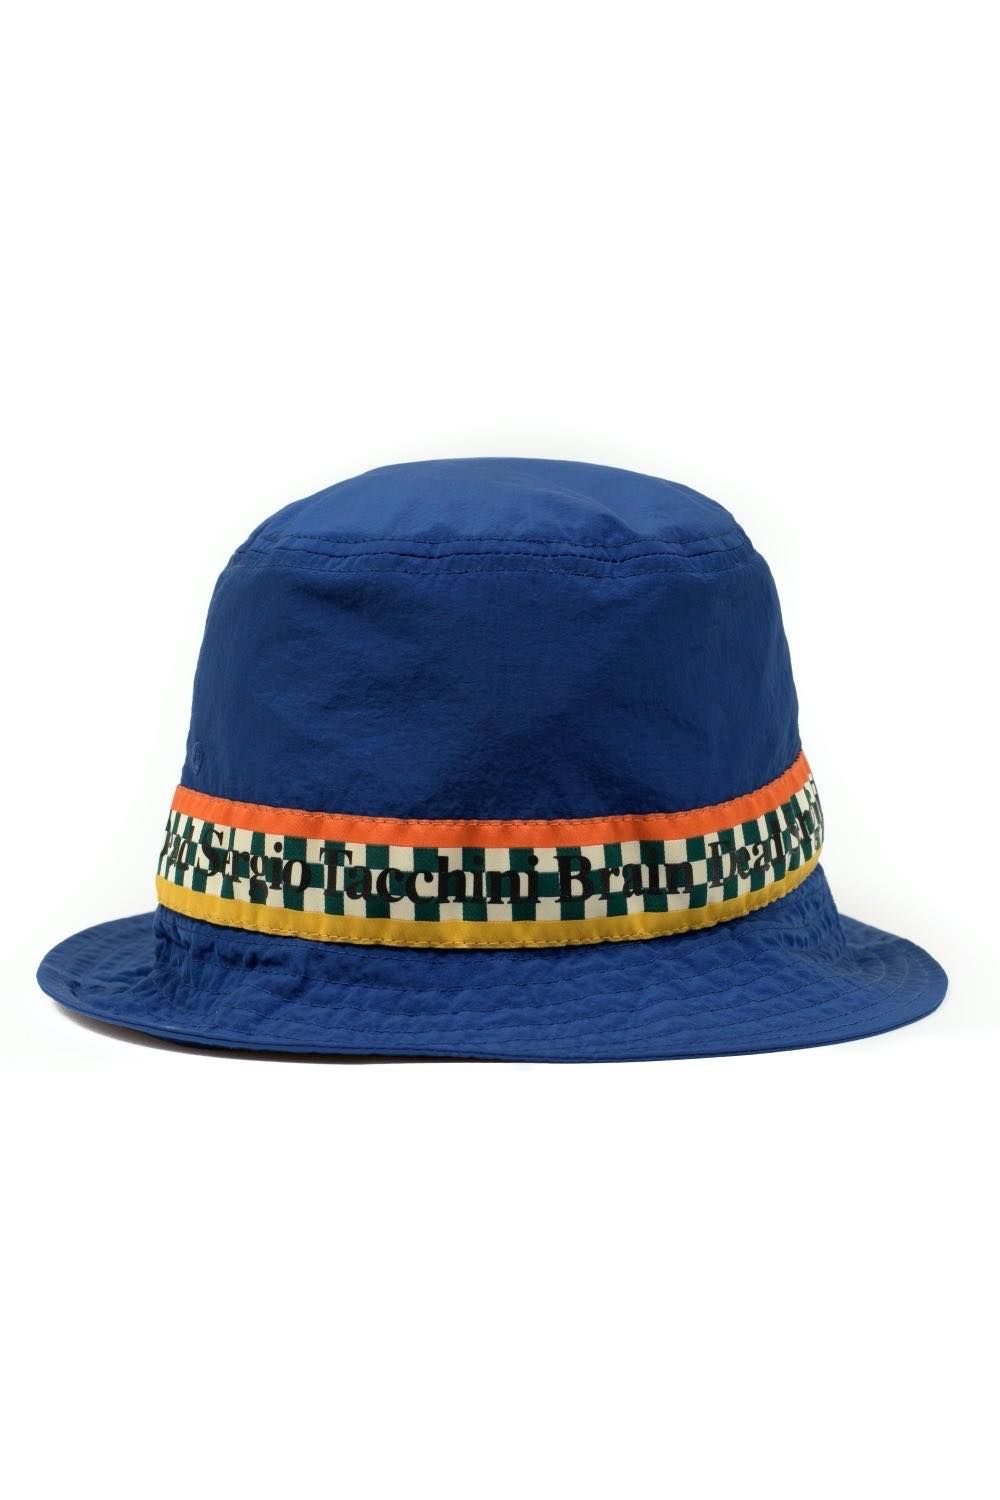 sergio tacchini × braindead bucket hat -bd navy- 22ss 3月1日発売 ！ - OS